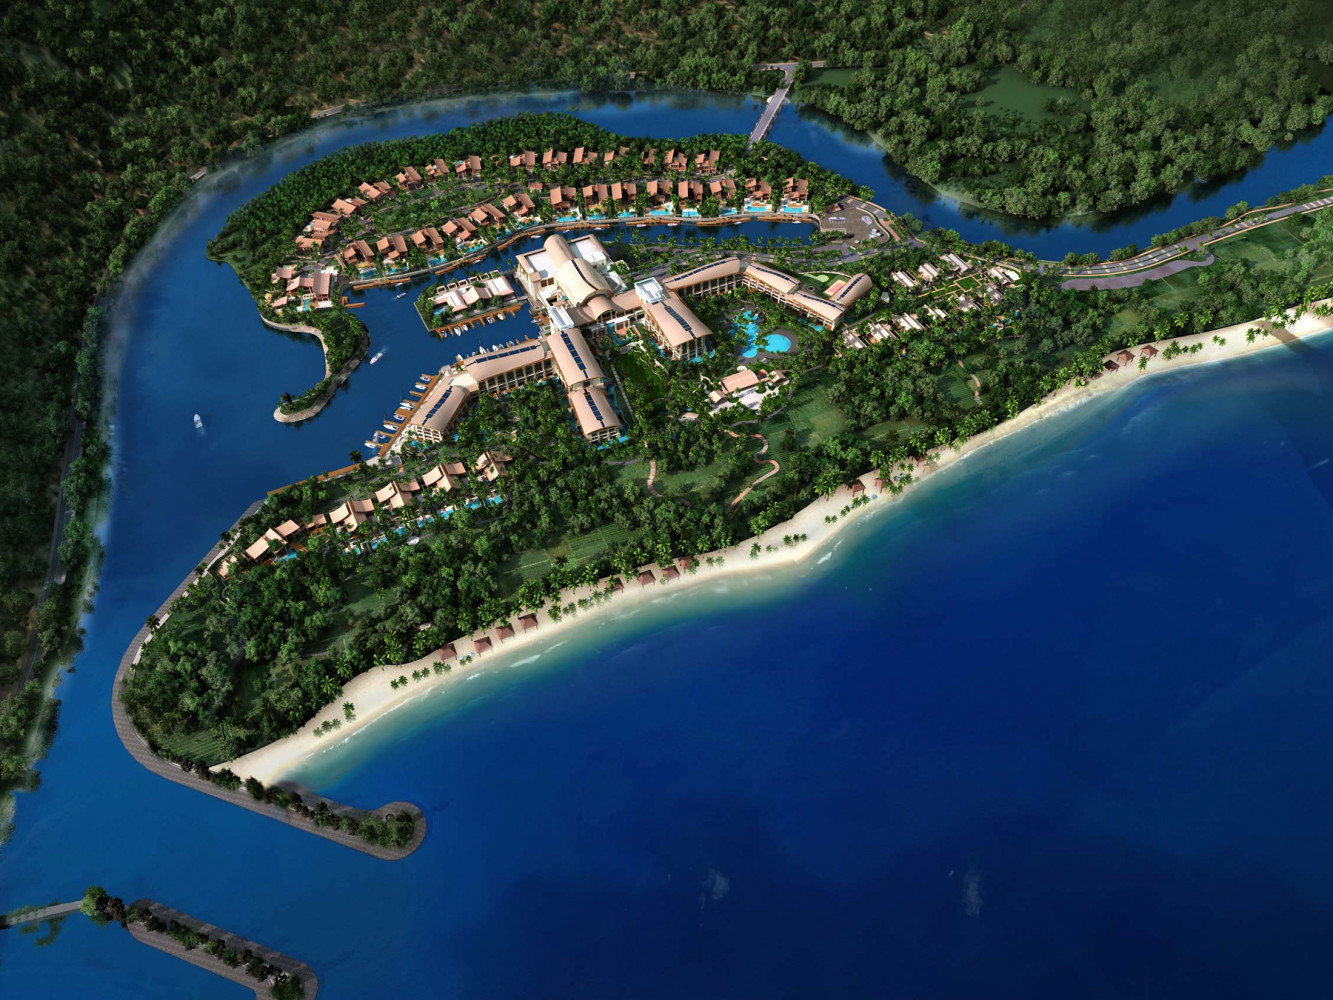 Sanya St. Regis Yalong Bay Resort, by Archilier Architecture